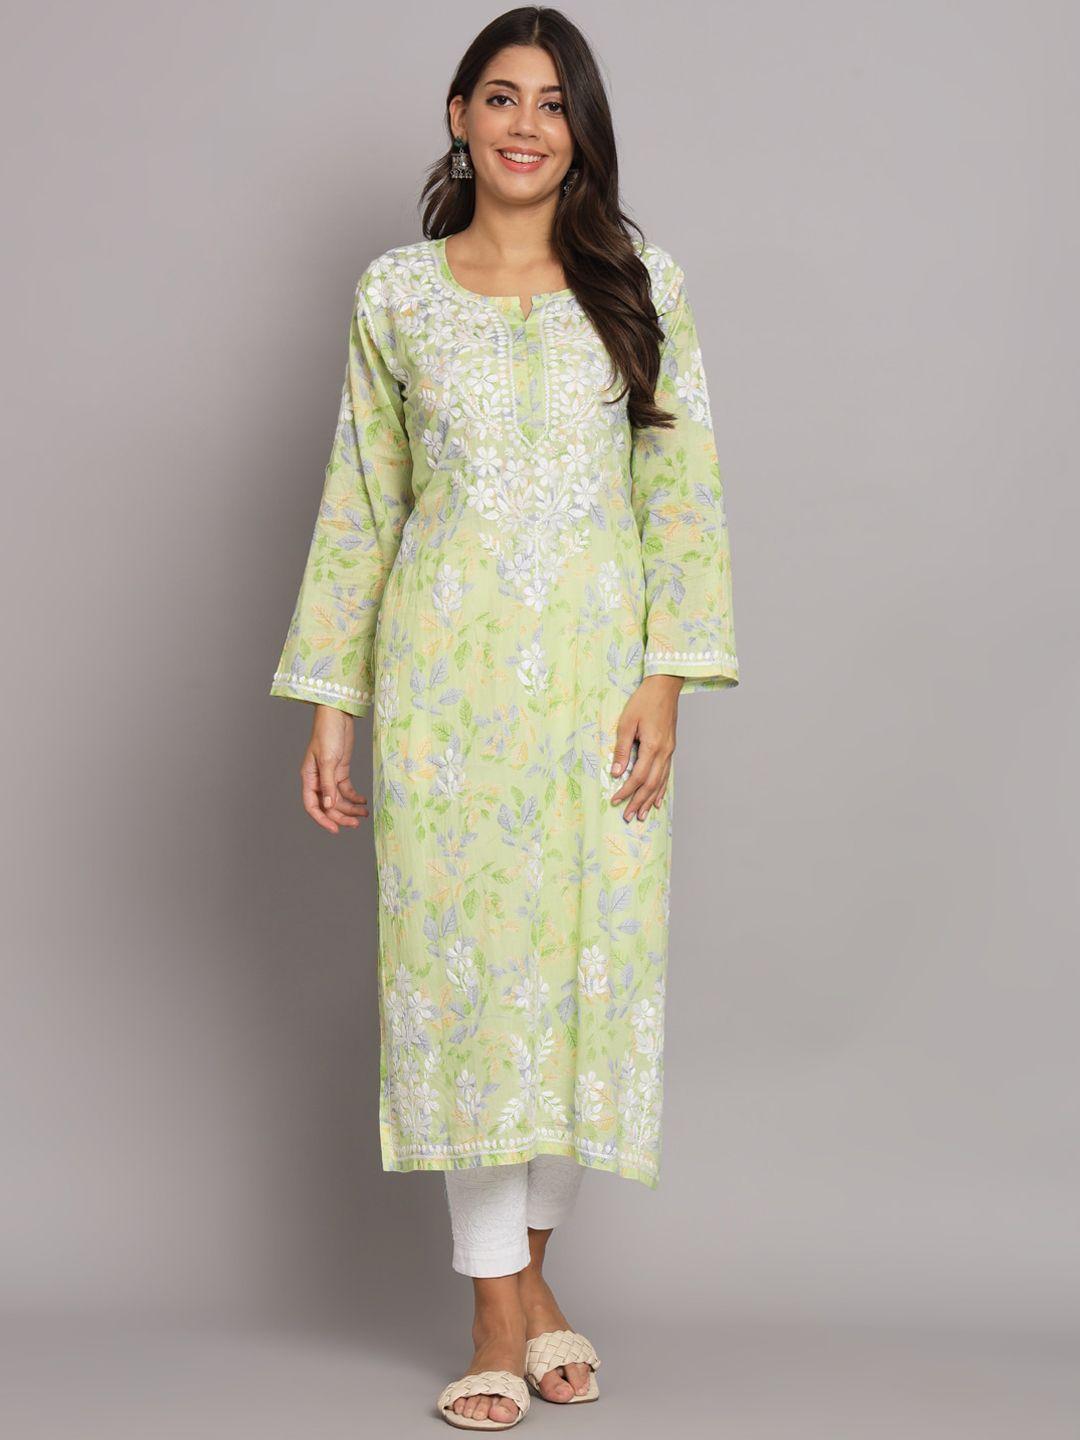 paramount-chikan-women-green-floral-embroidered-flared-sleeves-chikankari-floral-kurta